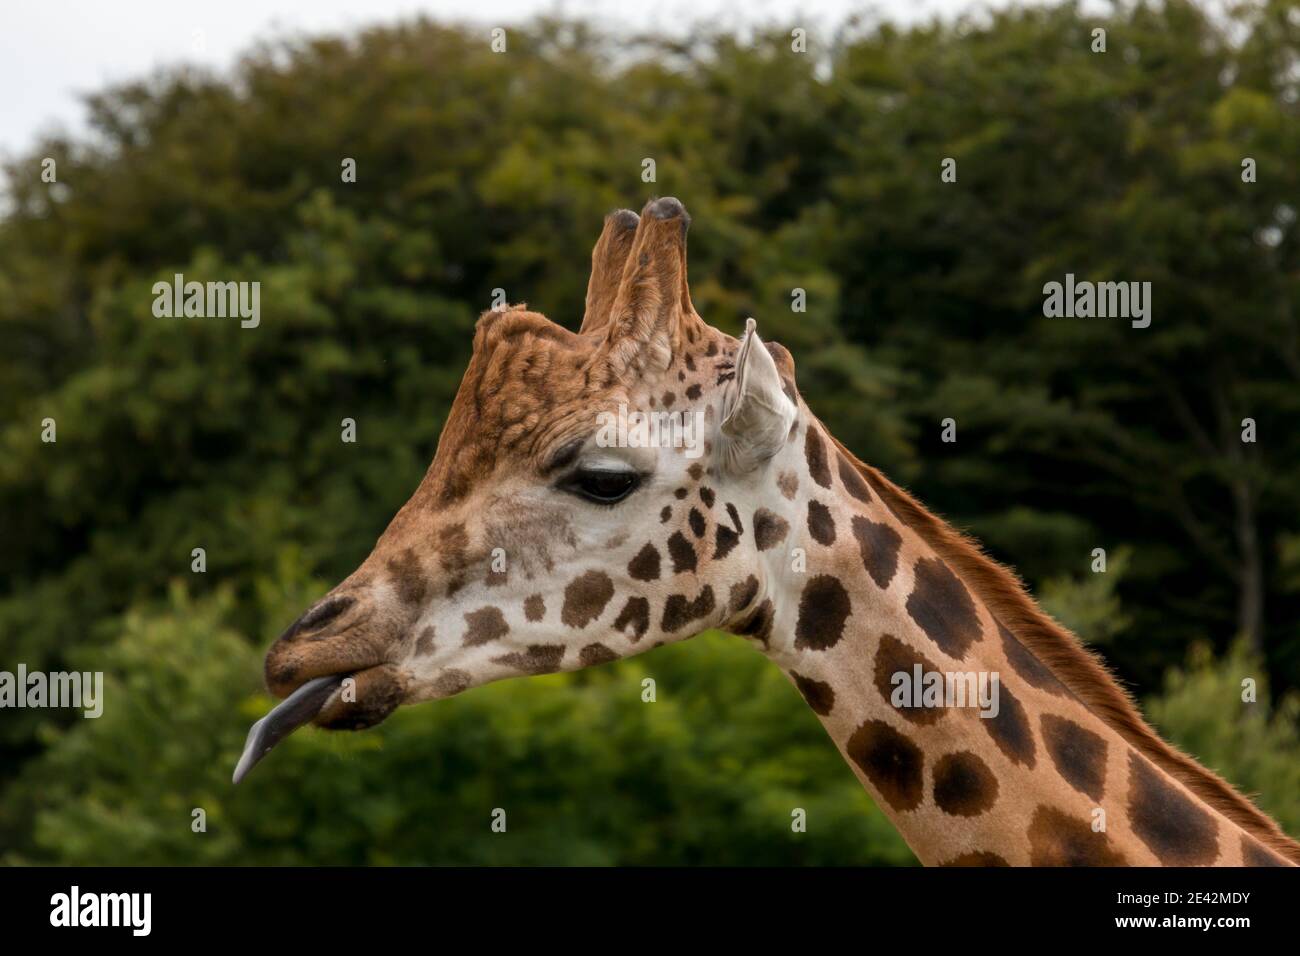 Close up photo of a giraffe, green trees in the background, sun shining, giraffe tongue visible. Stock Photo